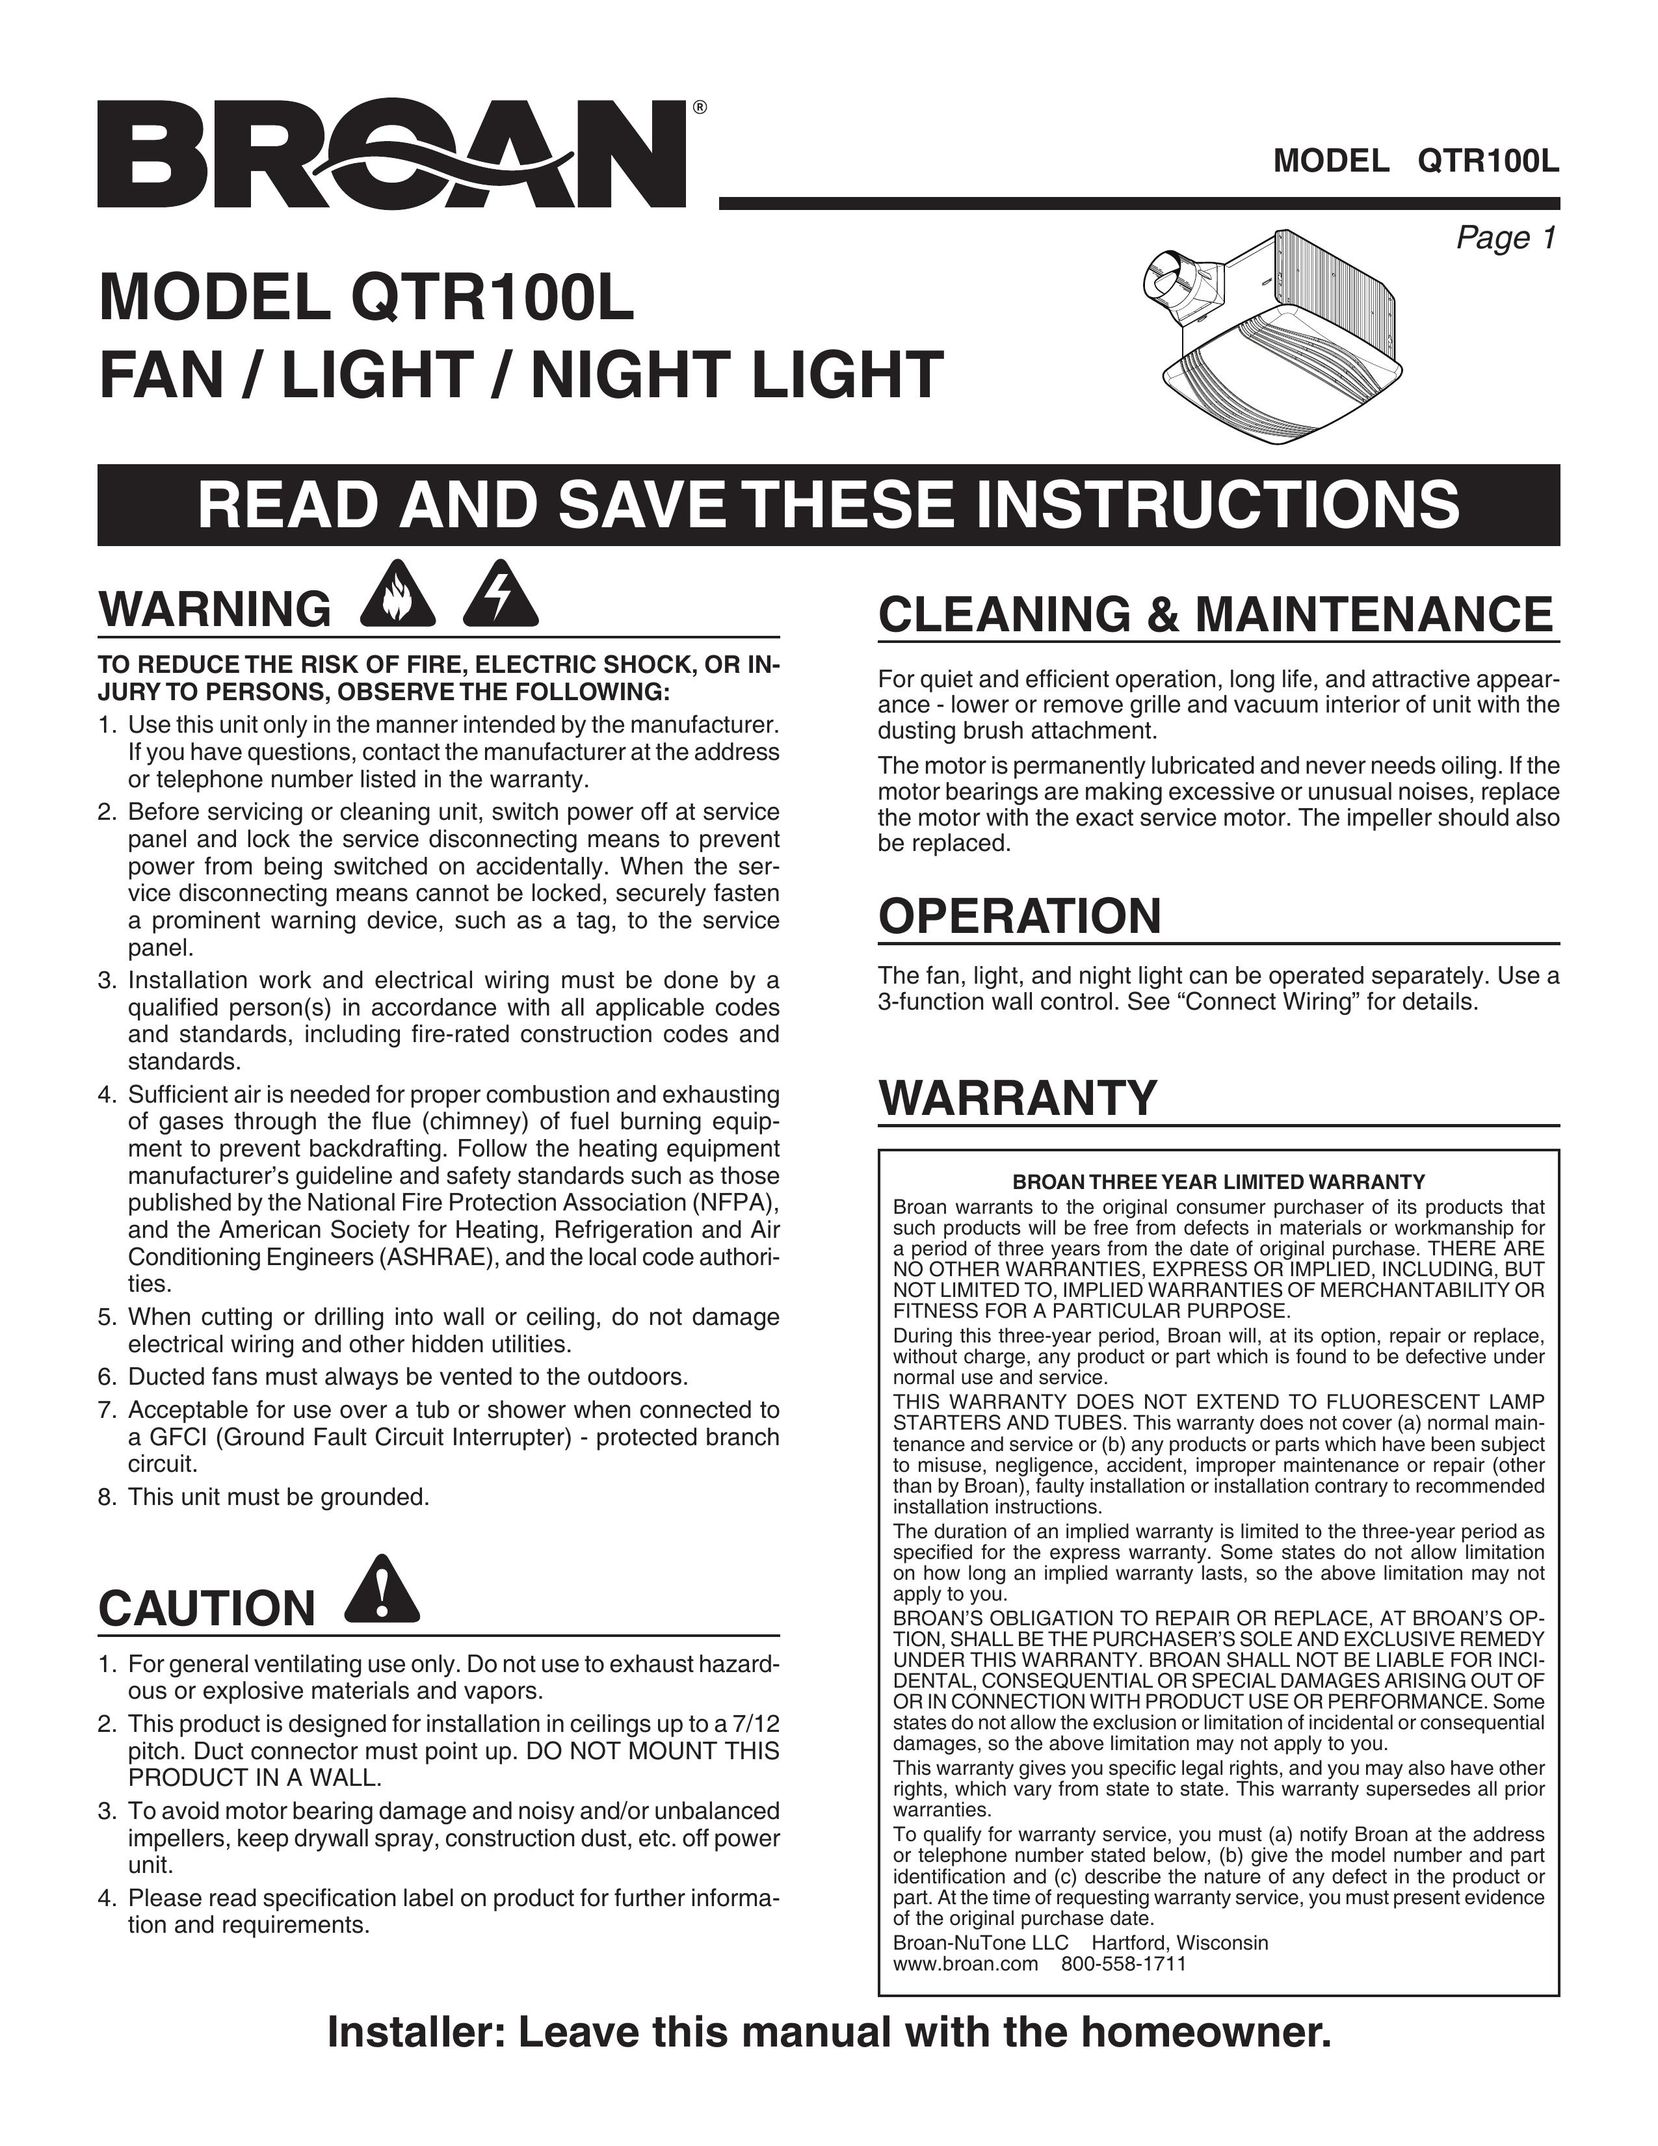 Broan QTR100L Indoor Furnishings User Manual